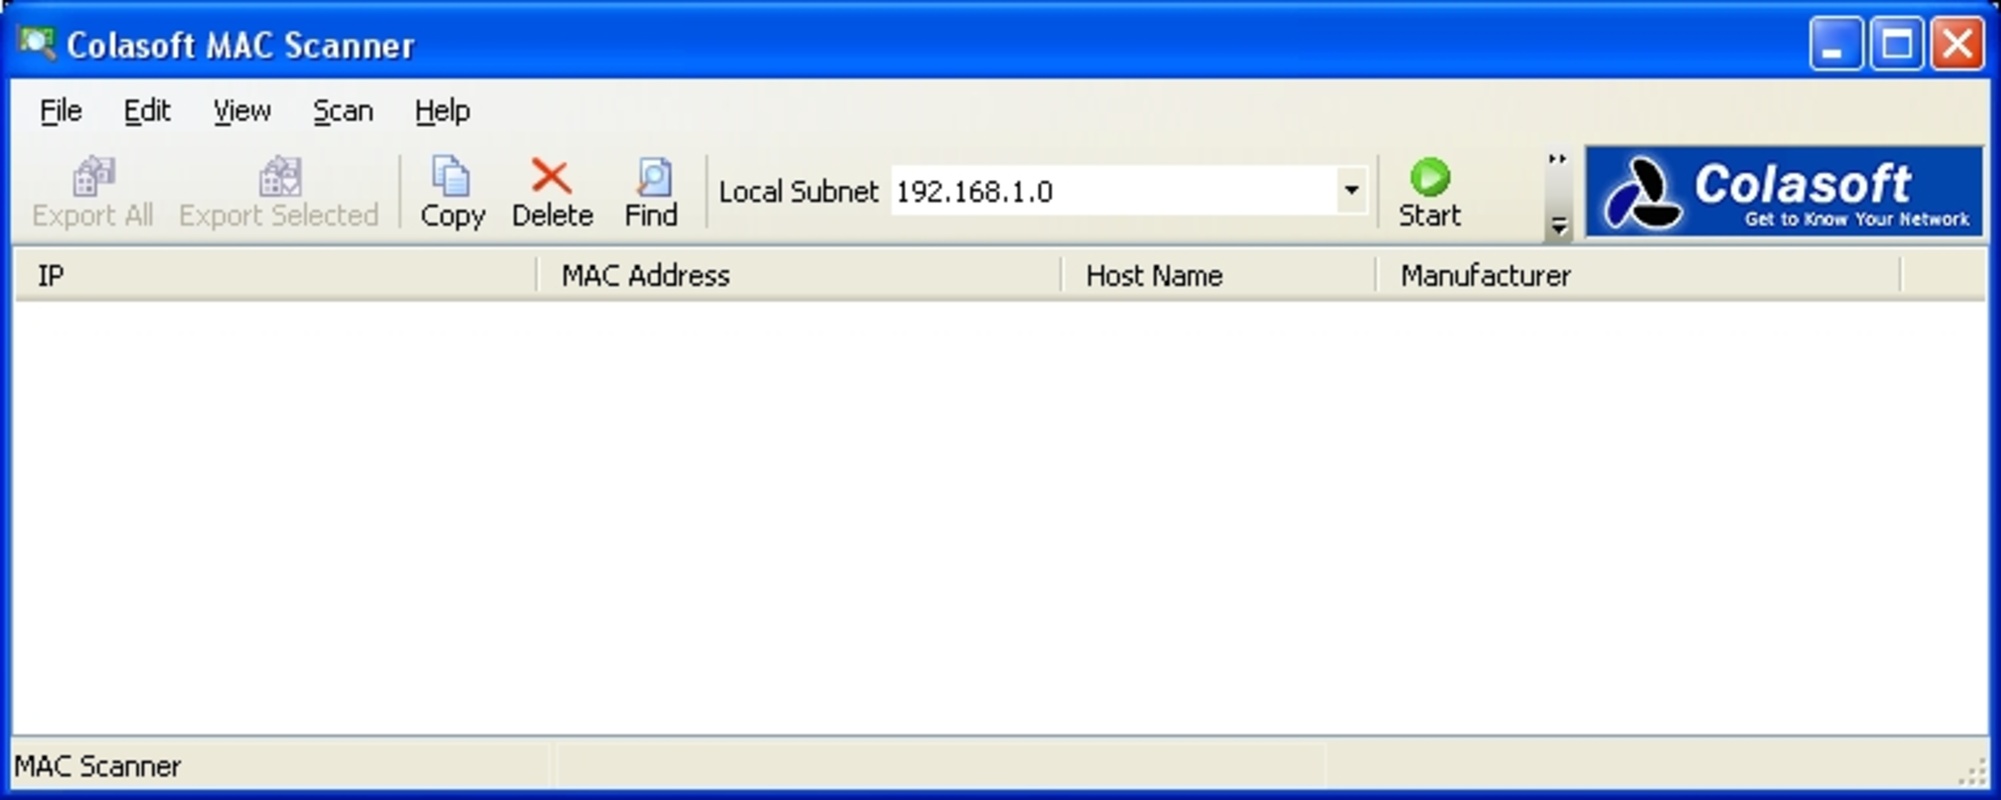 Colasoft MAC Scanner 1.1 Build 210 for Windows Screenshot 1